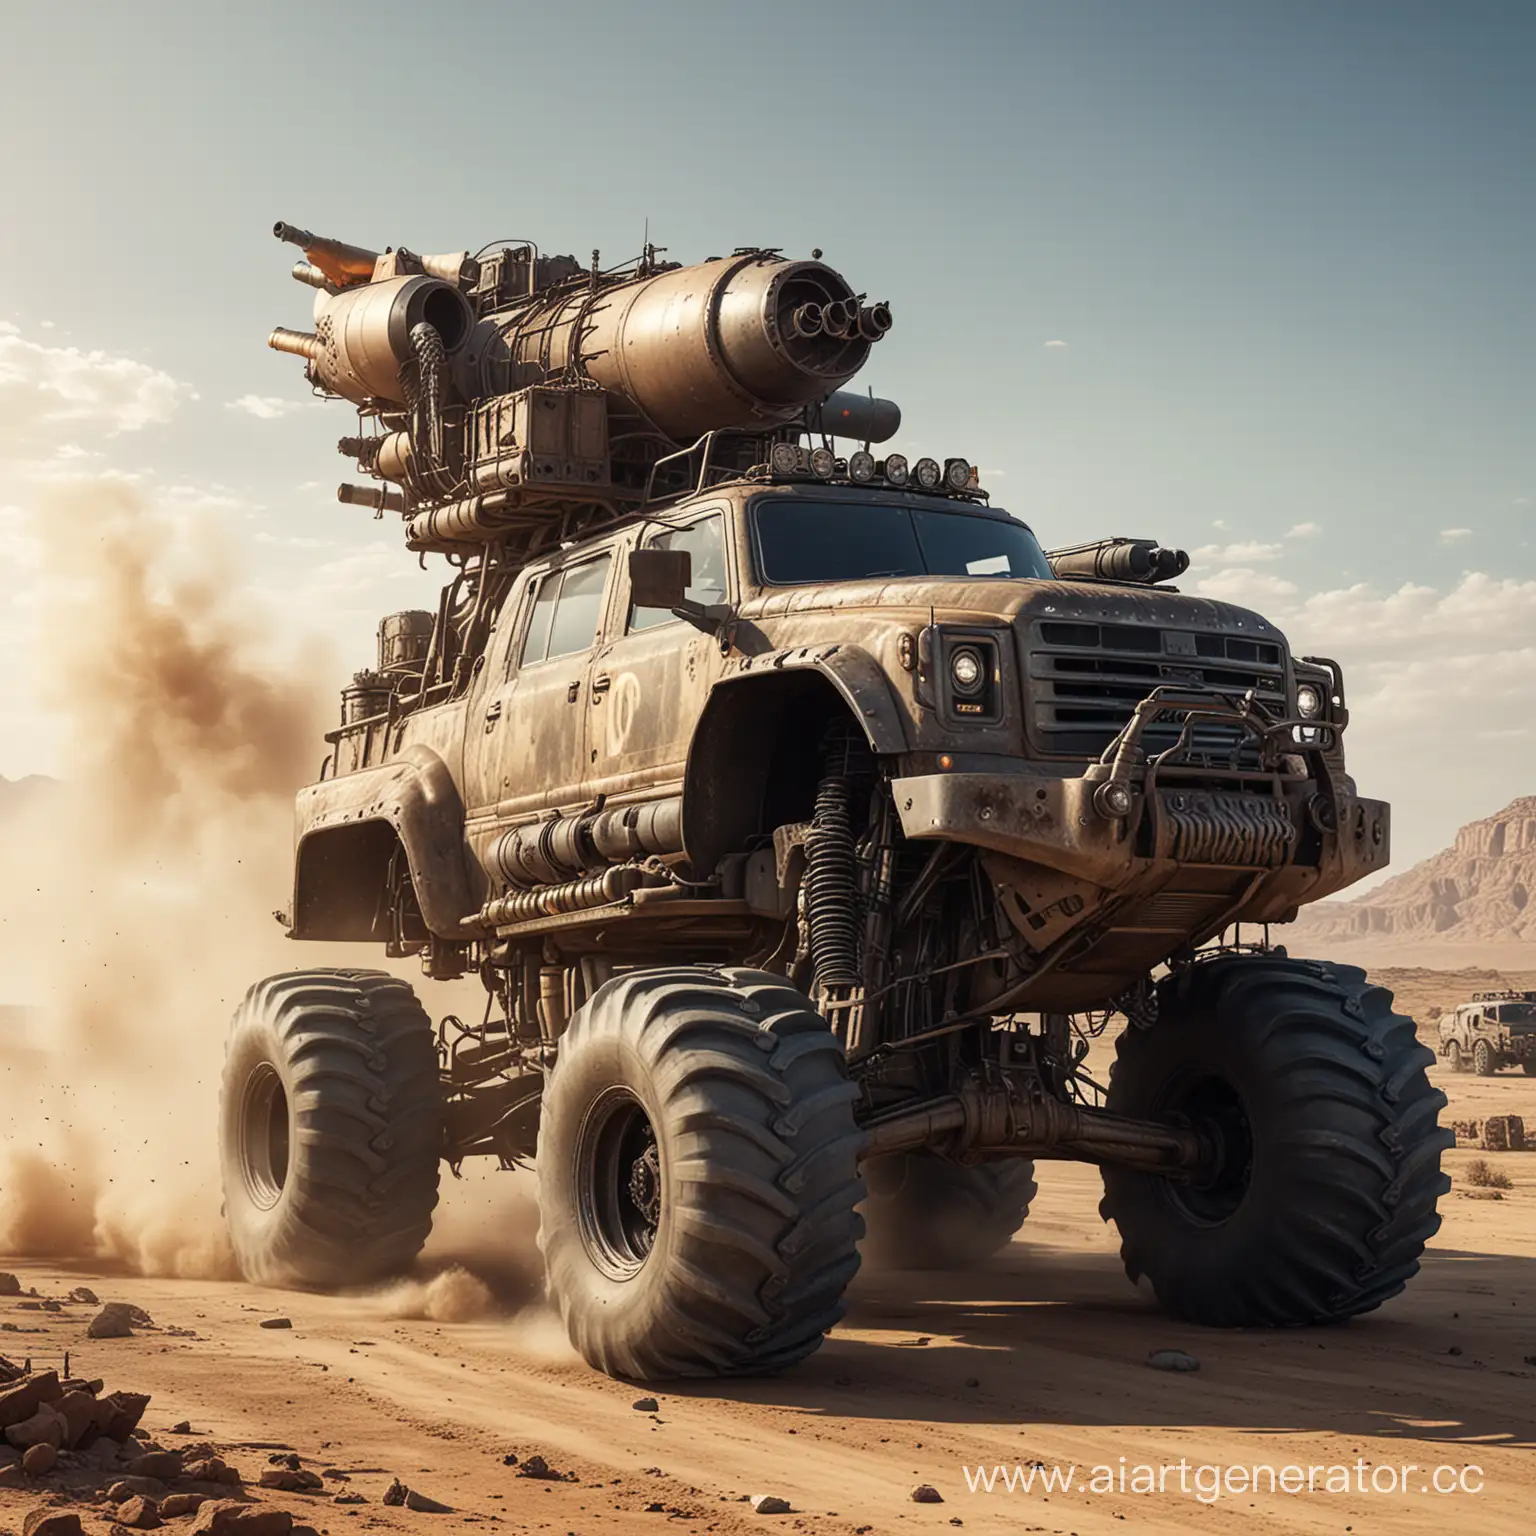 Desert-Wasteland-HighSpeed-Monster-Truck-with-Rocket-Launcher